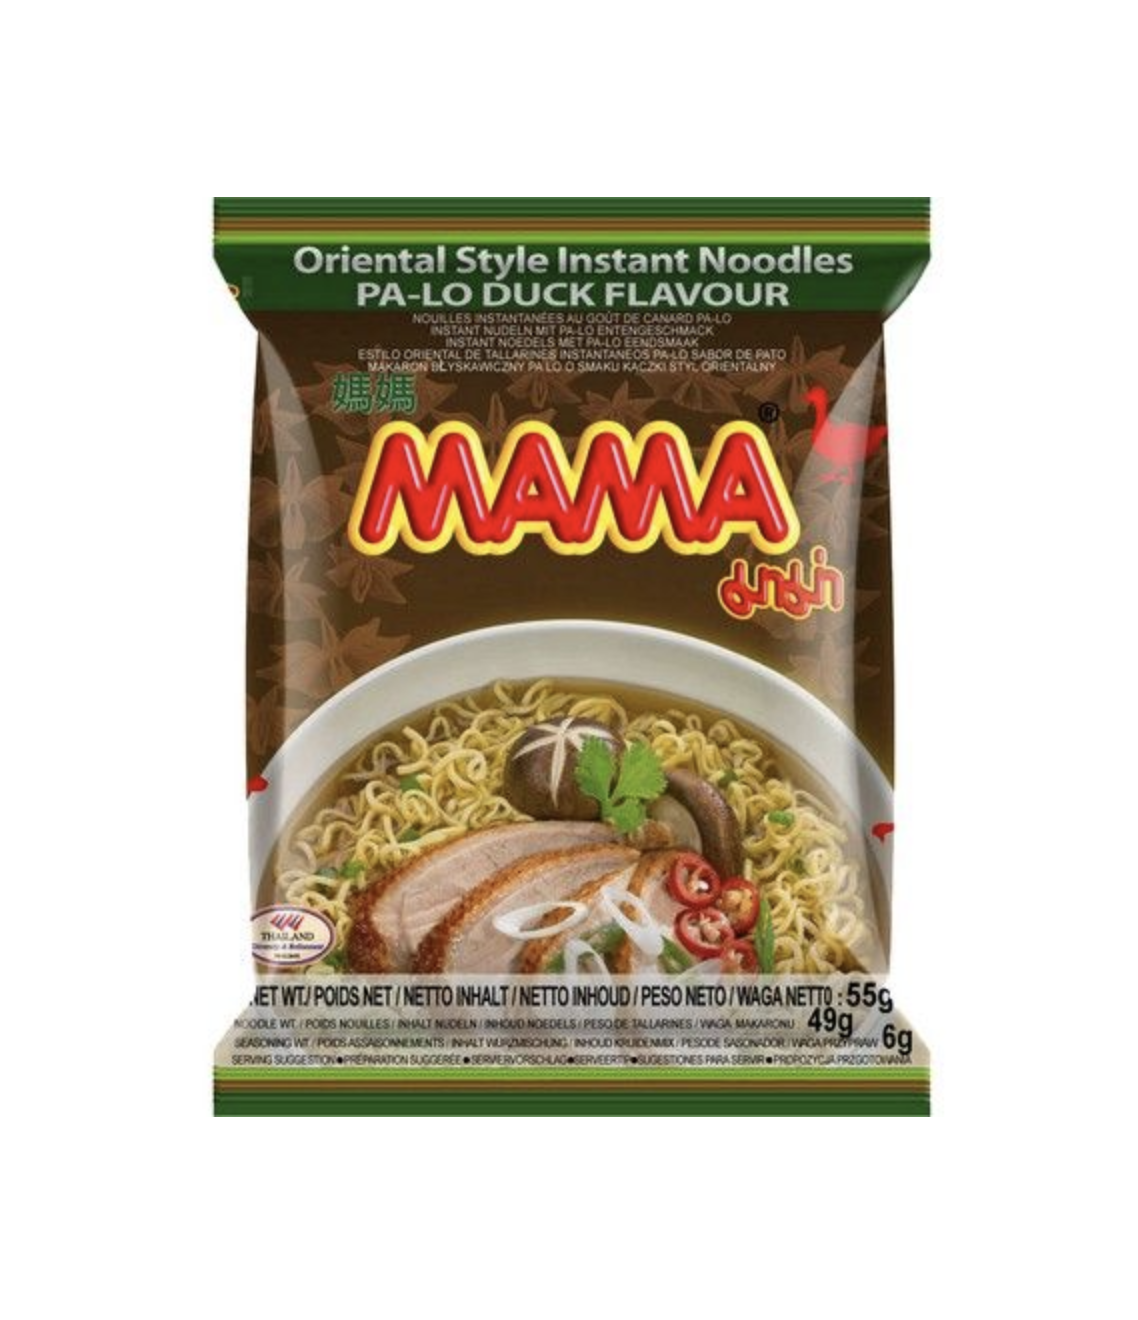 方便面 Pa-Lo 鸭风味 55g Mama 泰国